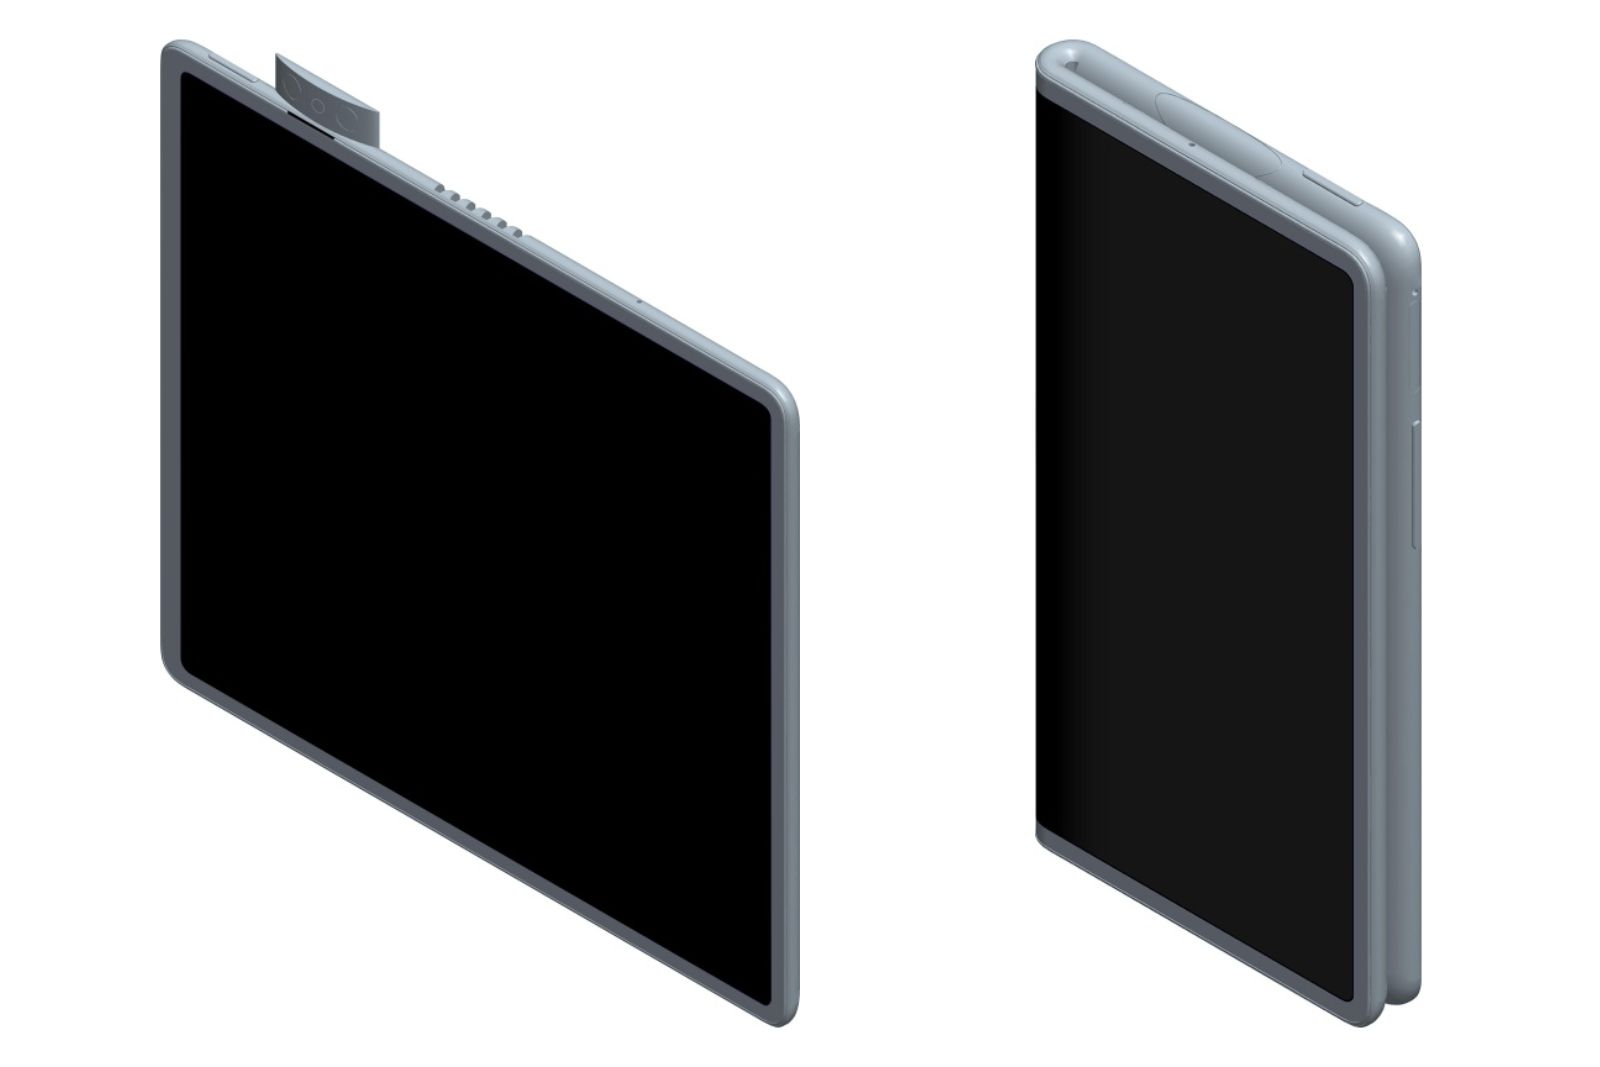 Oppos foldable phone image 3